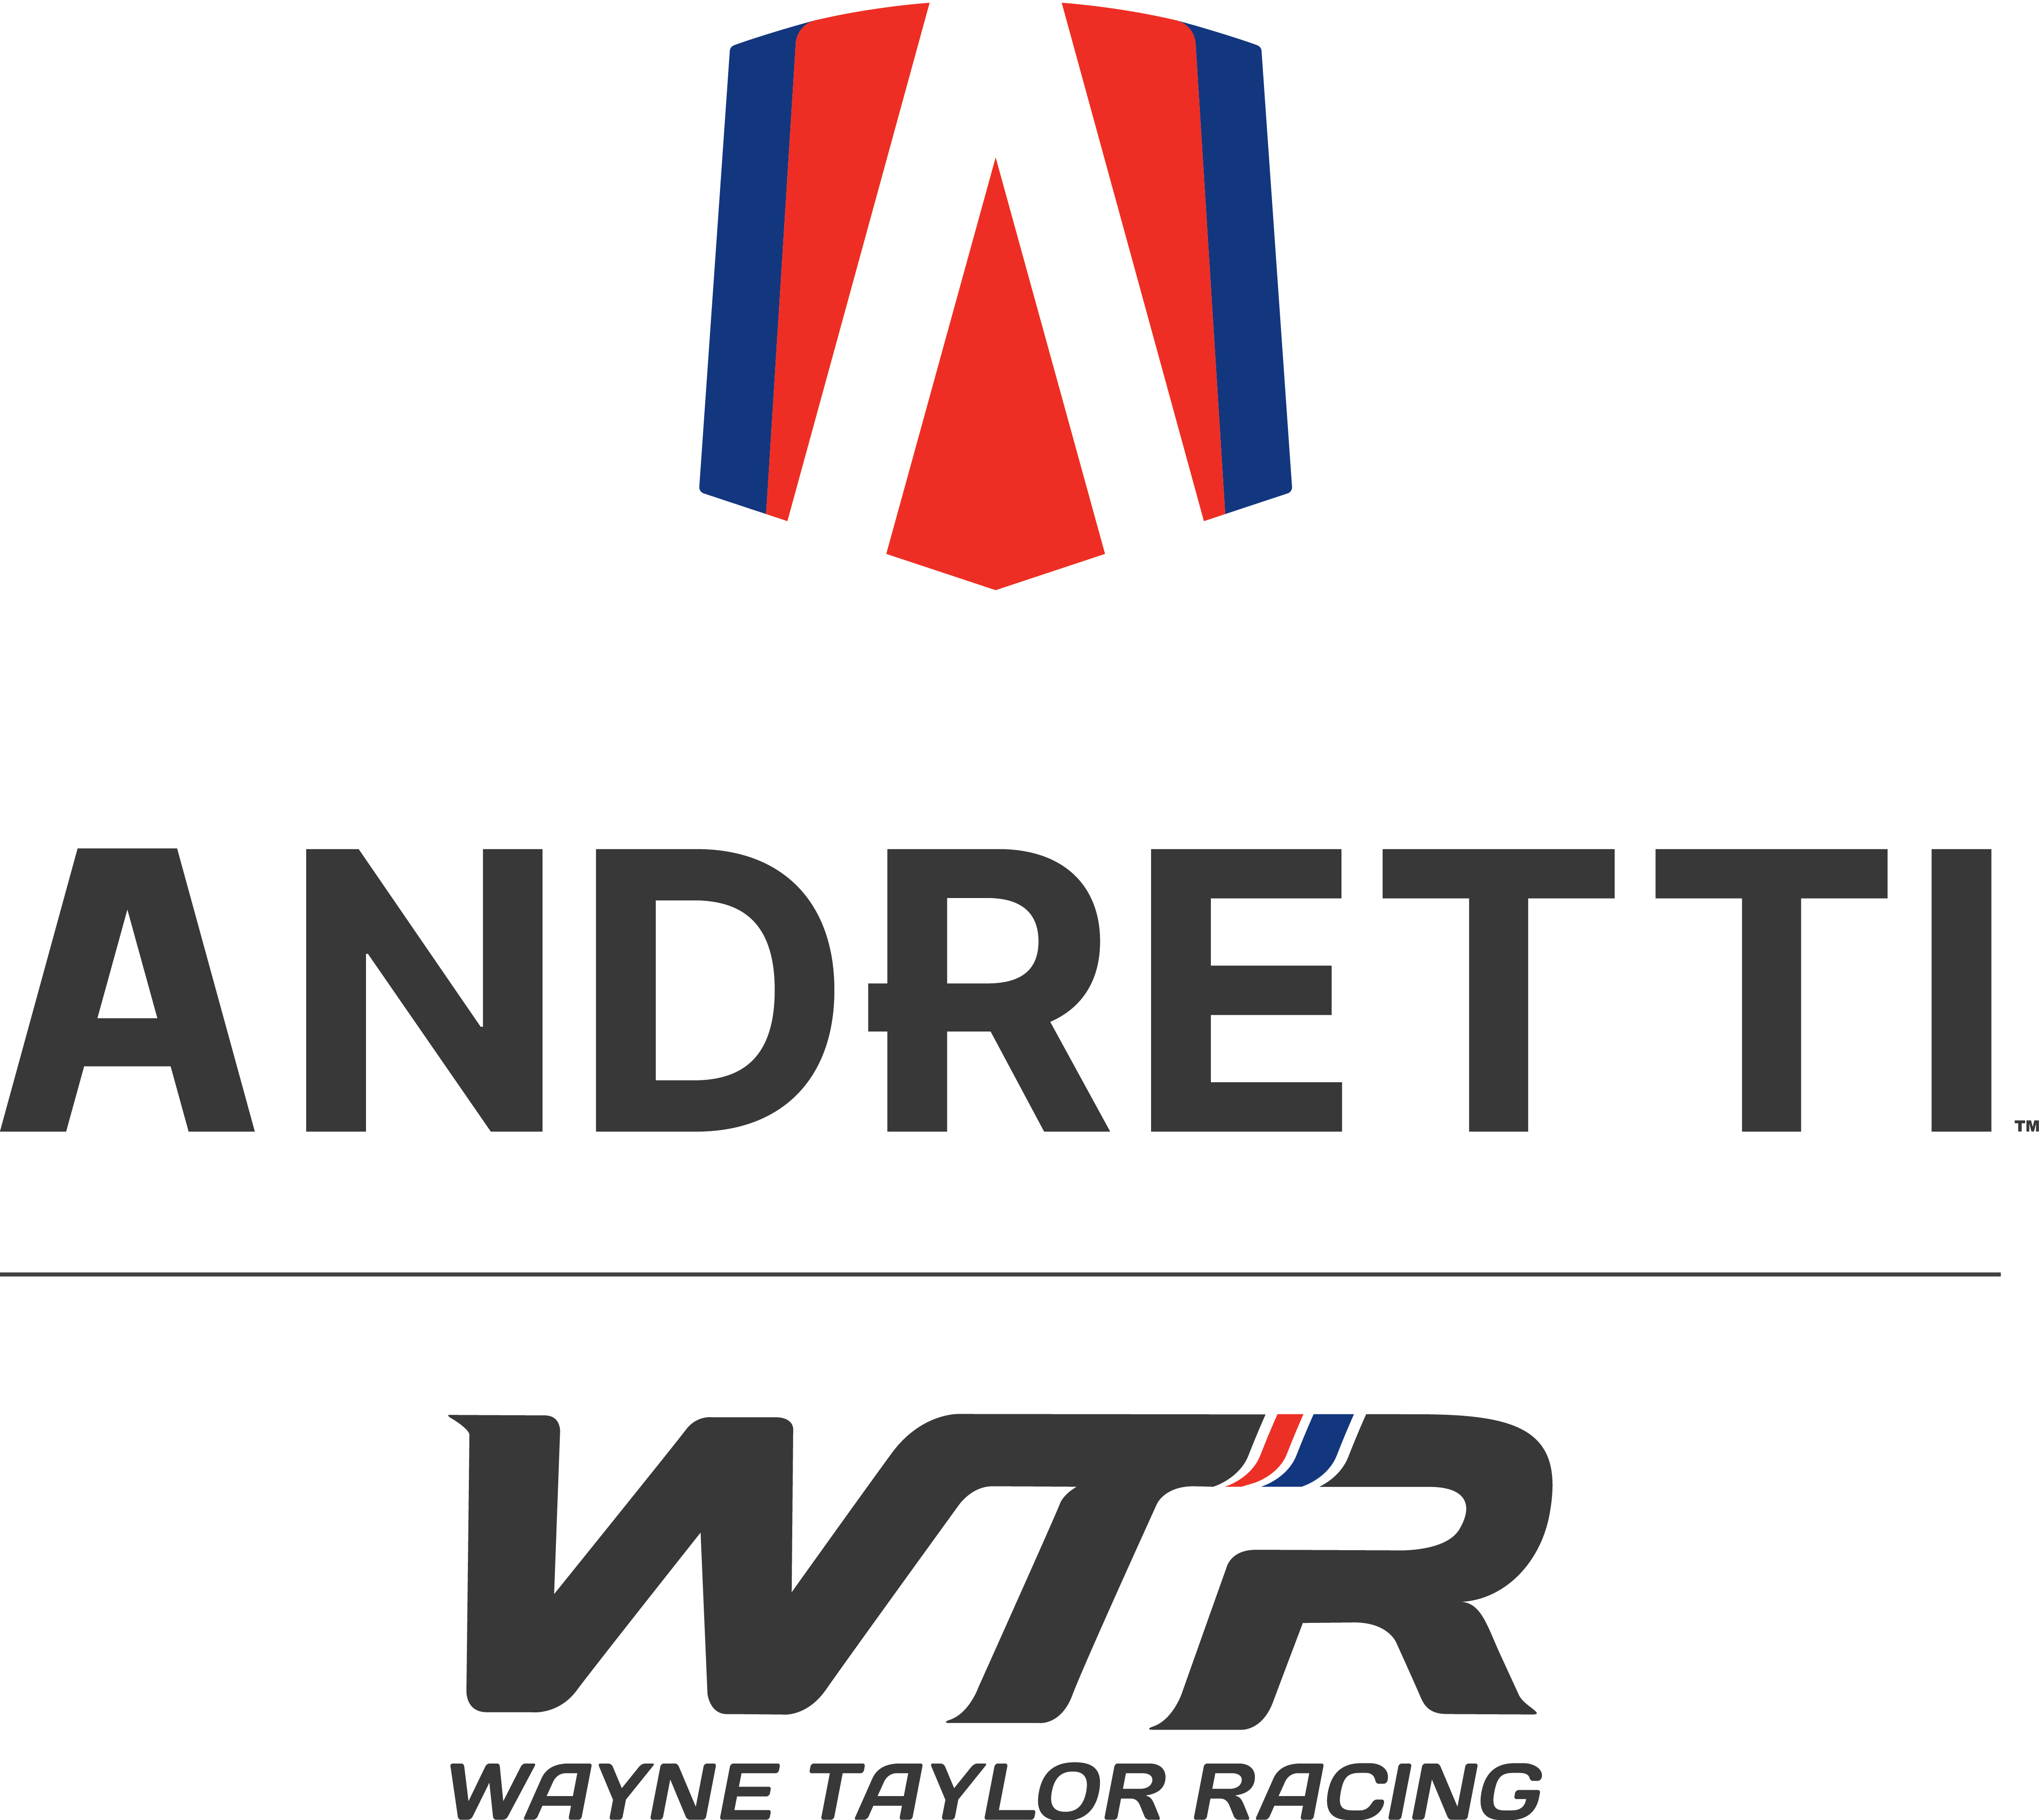 Andretti IMSA SPORTSCARS team logo